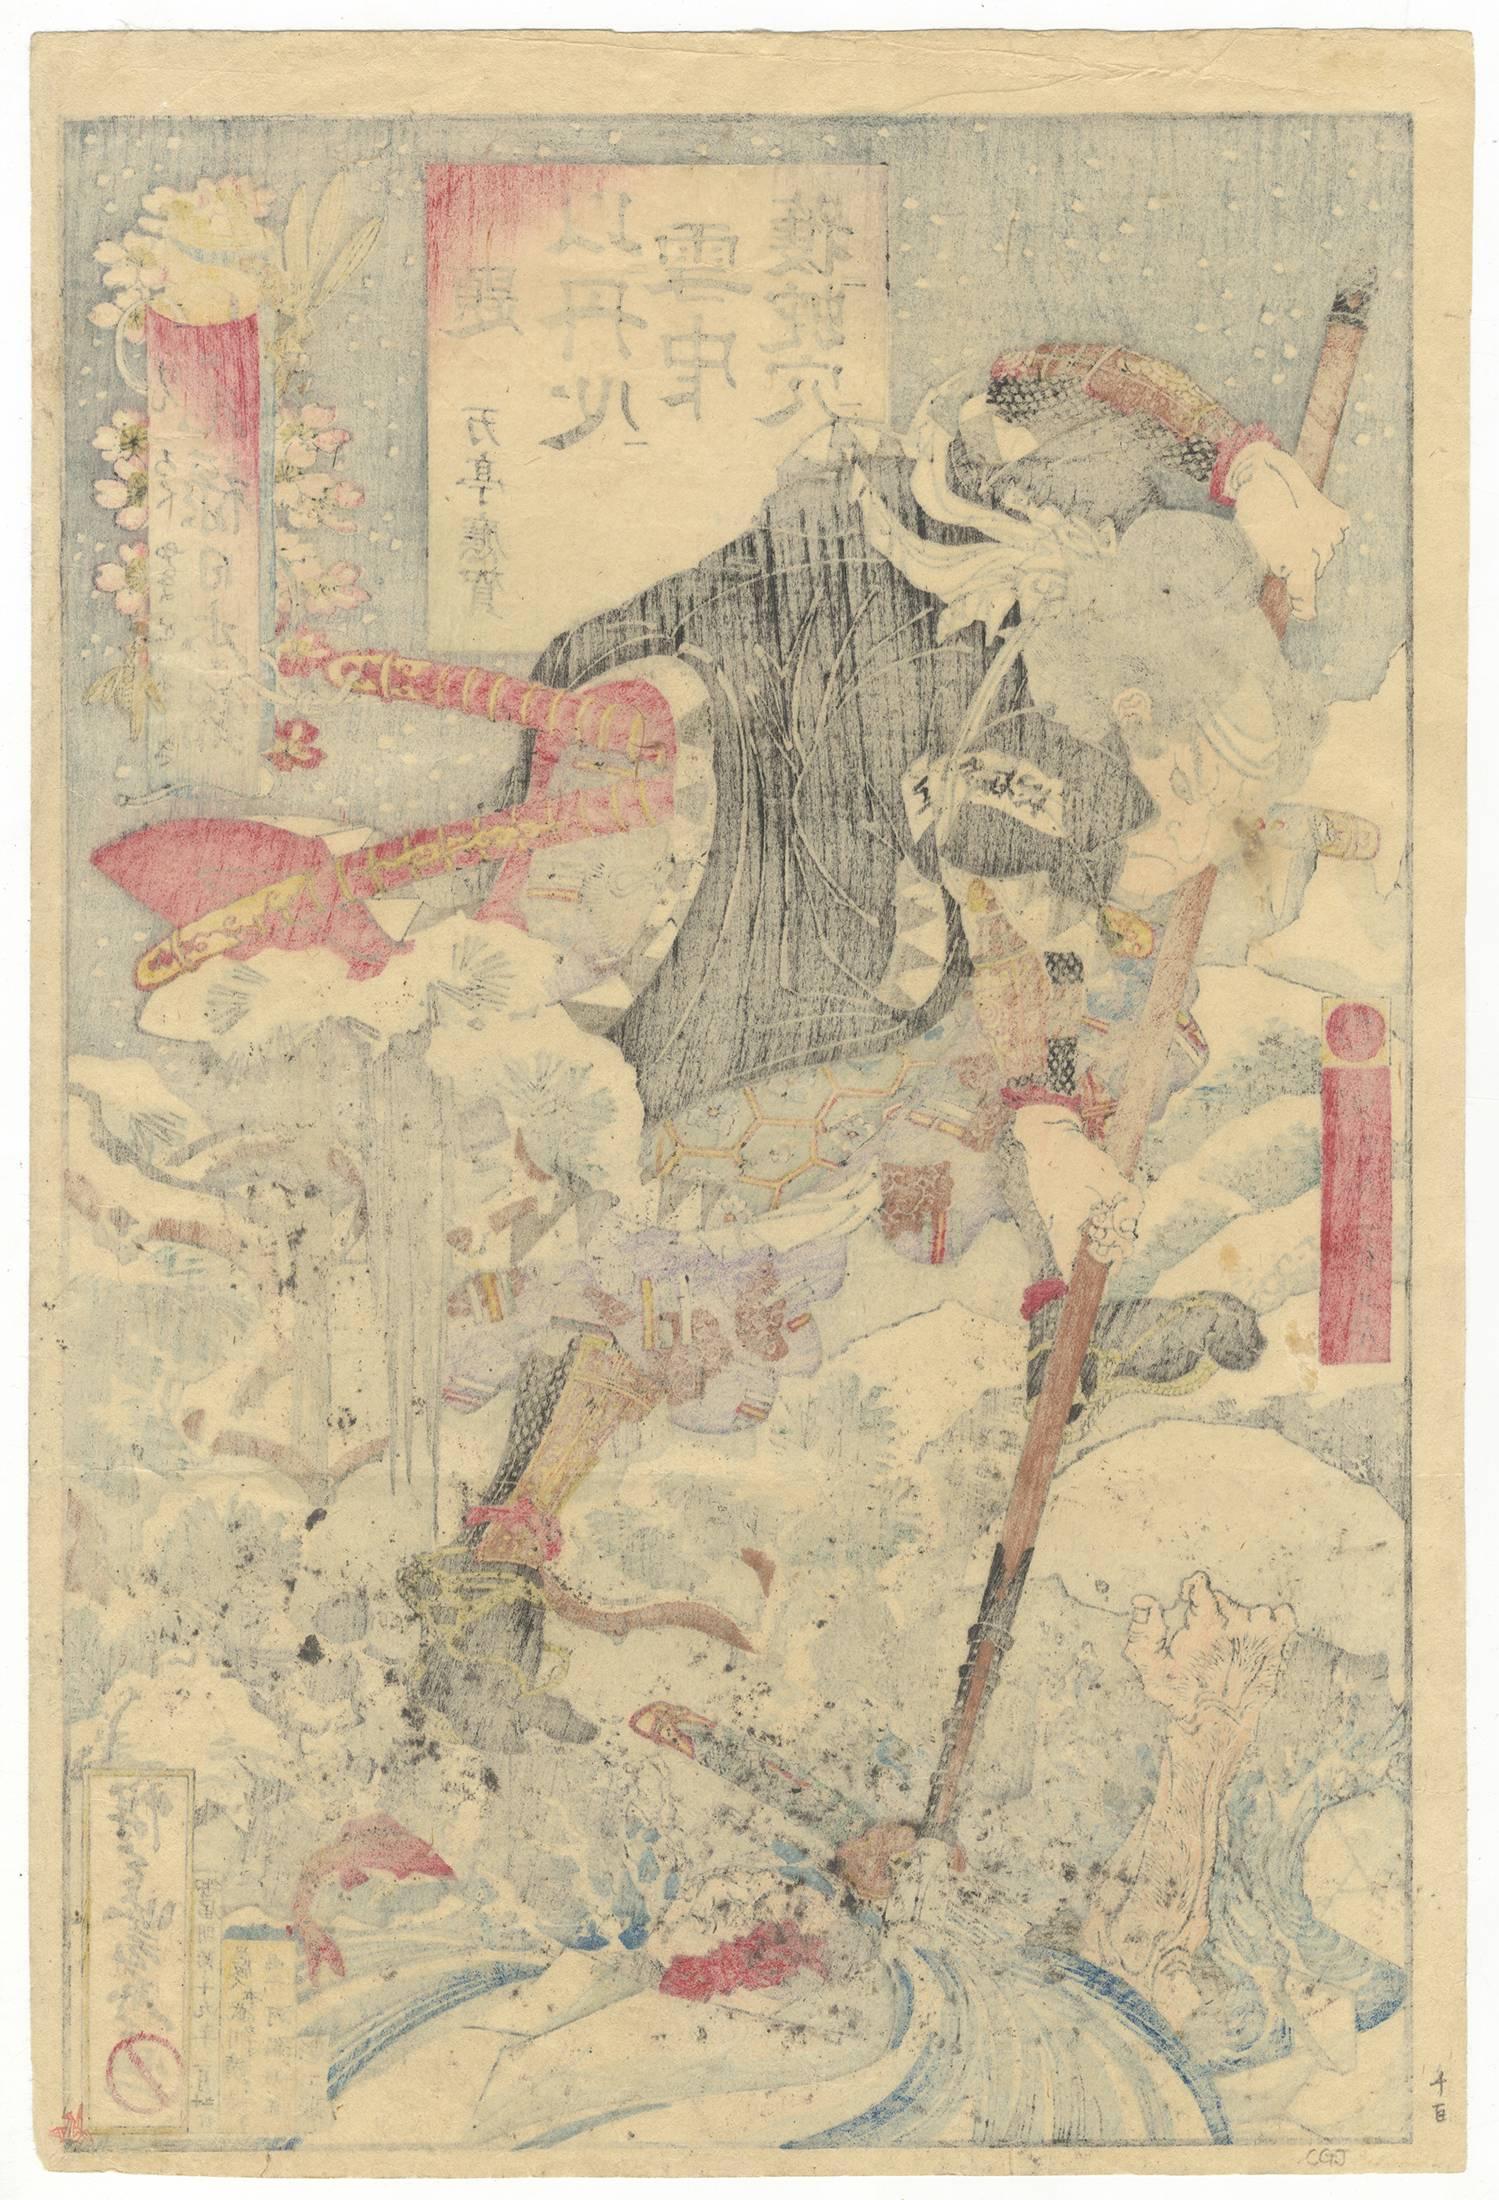 Hand-printed on traditional Japanese washi paper (mulberry tree paper).

Artist: Kyosai Kawanabe 
Title: Having faith finds snake nest (Horibe Yasubei Taketsune)
Publisher: Takekawa Seikichi 

The print is of Horibe Yasubei Taketsune (1670-1703), a